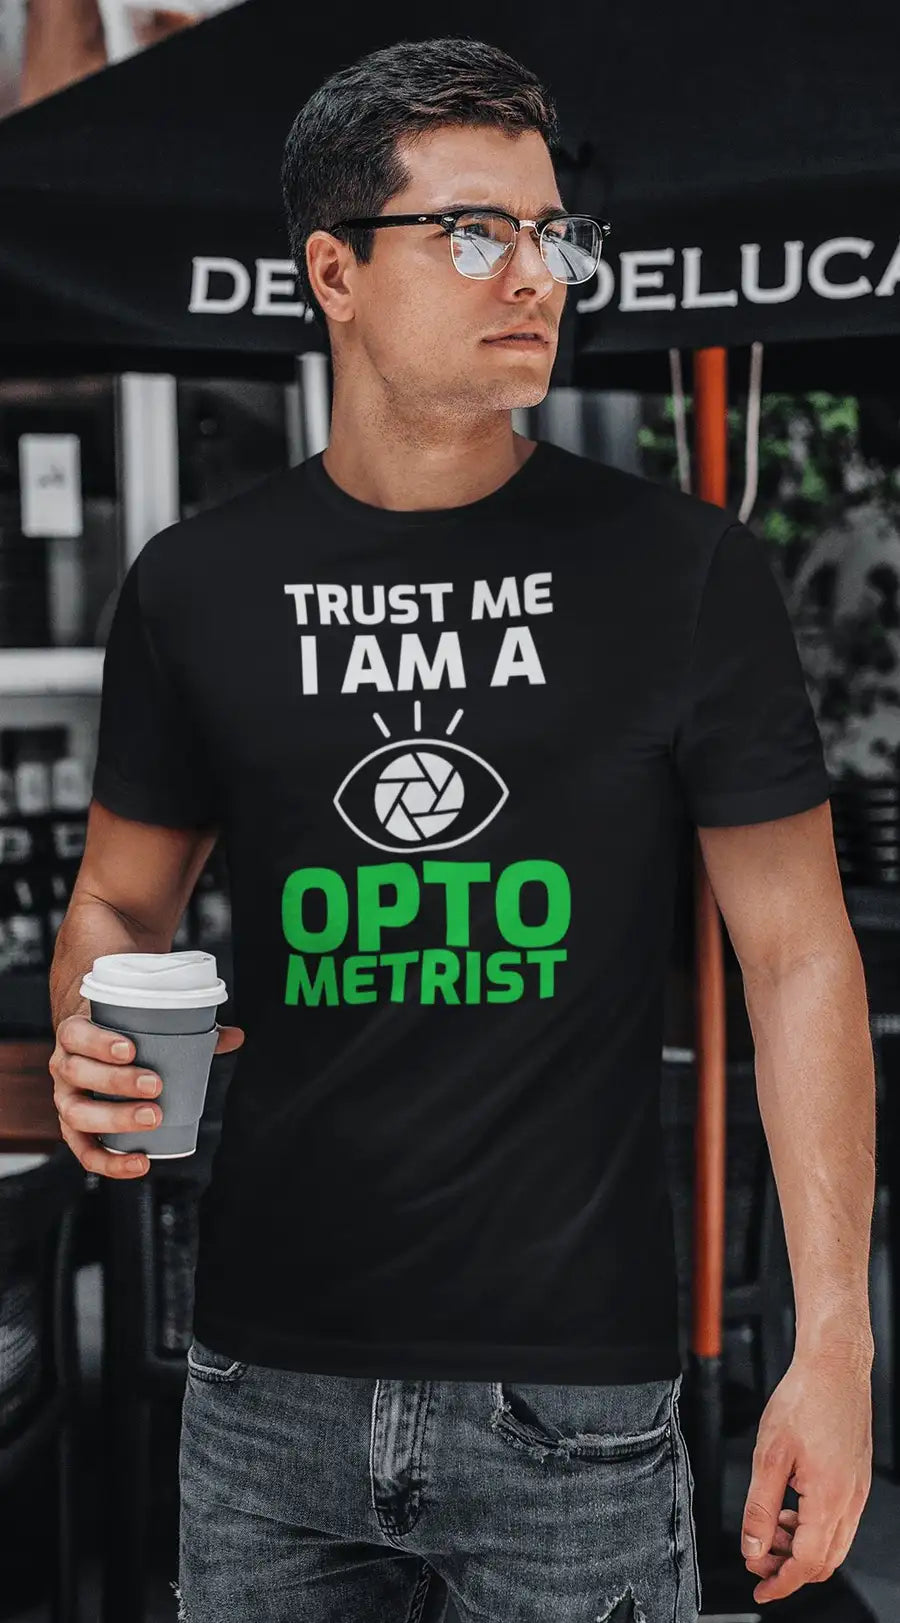 Optometrist "Trust Me" Black T-Shirt | Premium Design | Catch My Drift India - Catch My Drift India Clothing black, clothing, doctor, made in india, optometrist, shirt, t shirt, tshirt